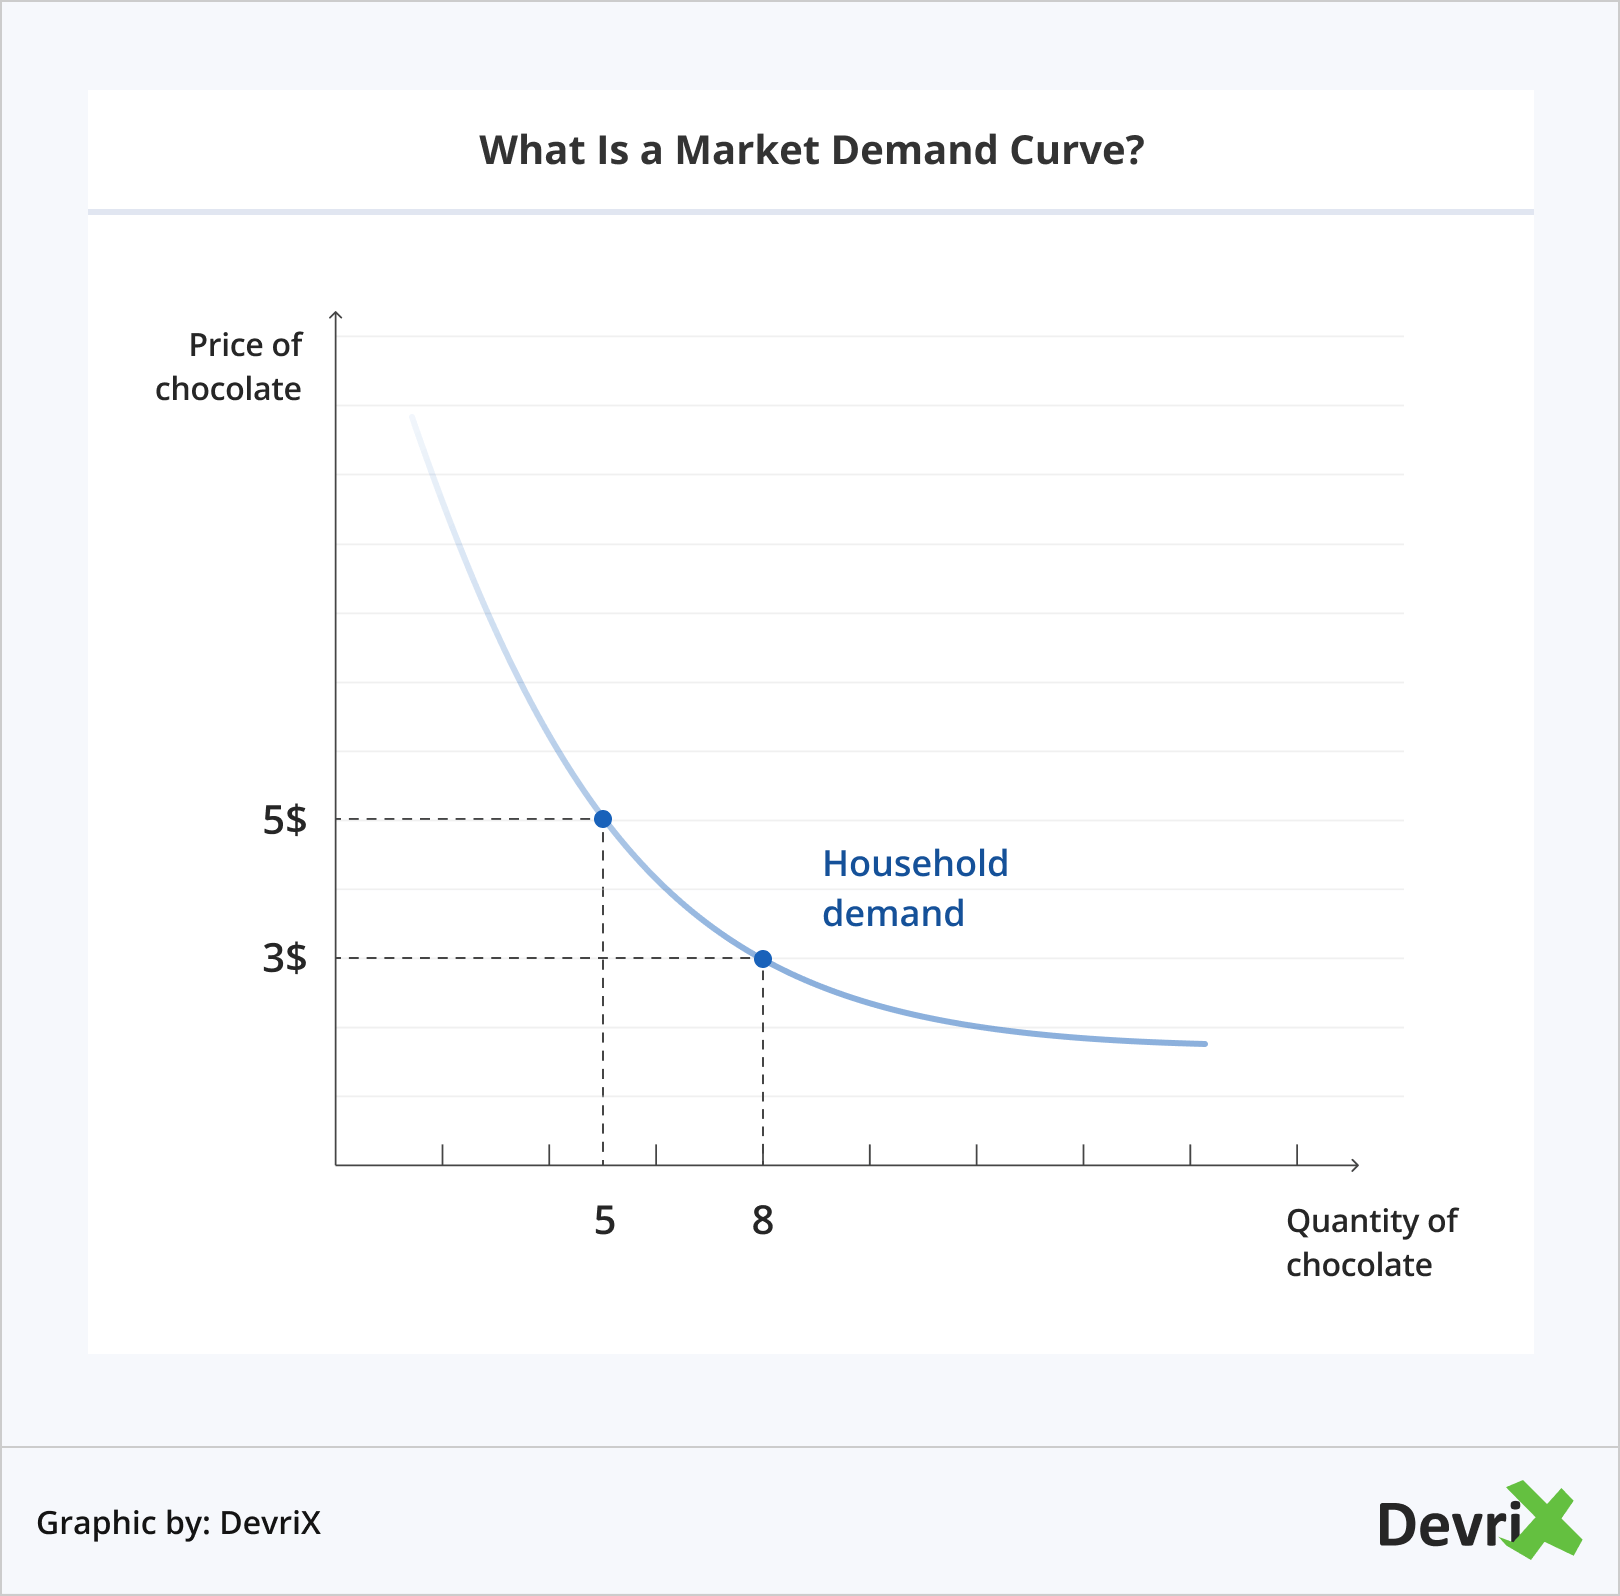 What Is a Market Demand Curve